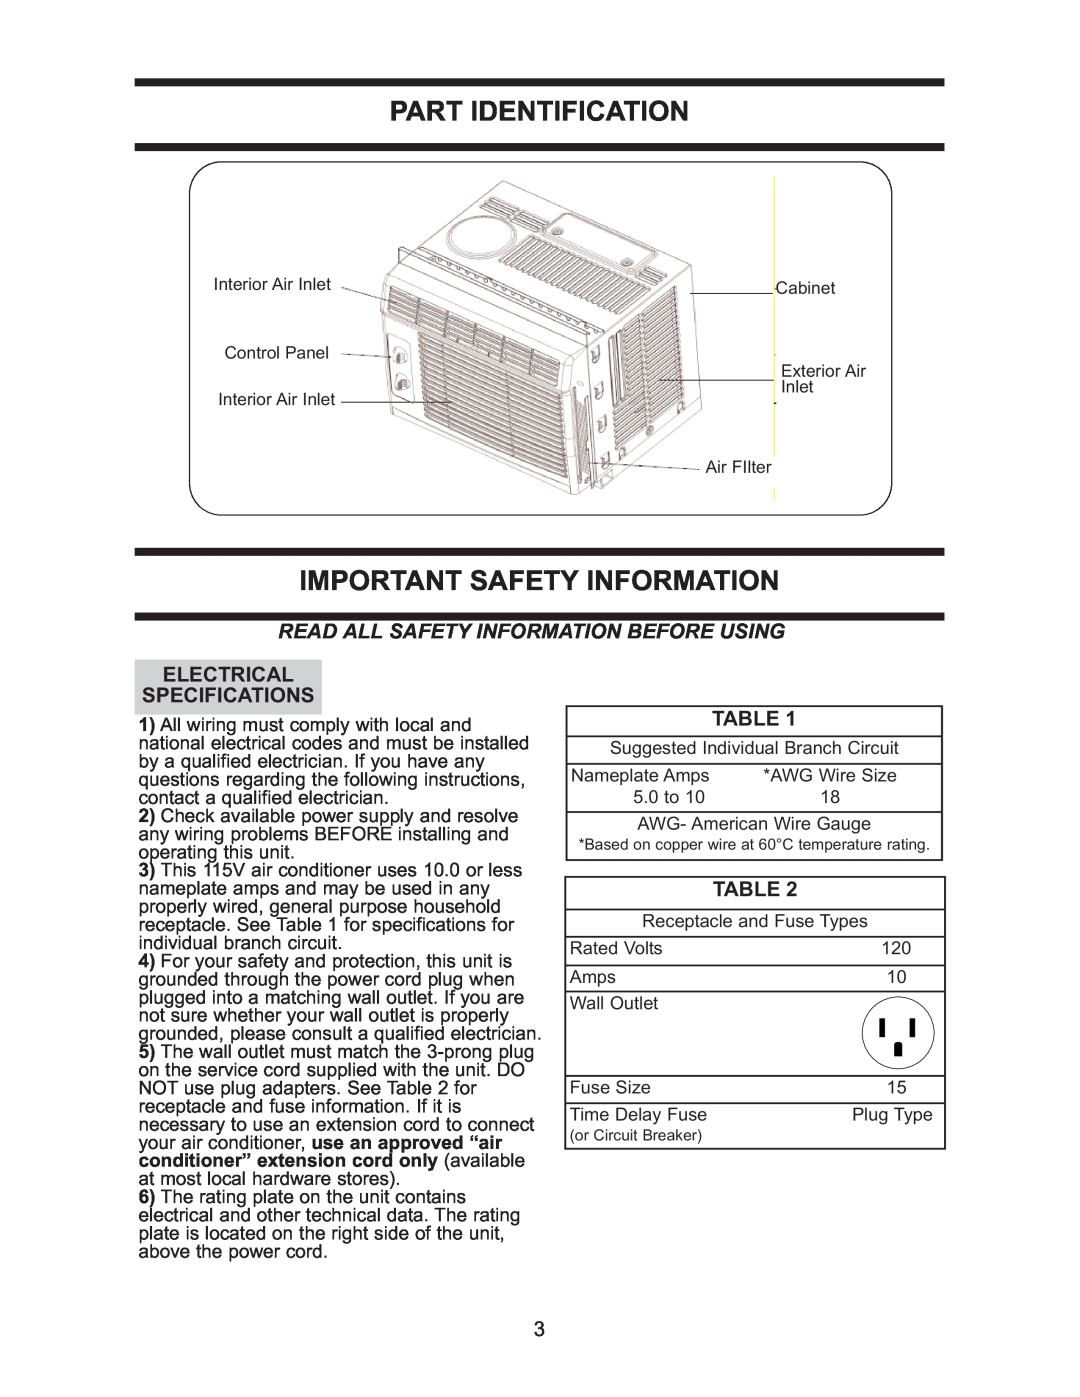 Danby DAC 5209M manual Part Identification, Important Safety Information, Read All Safety Information Before Using 